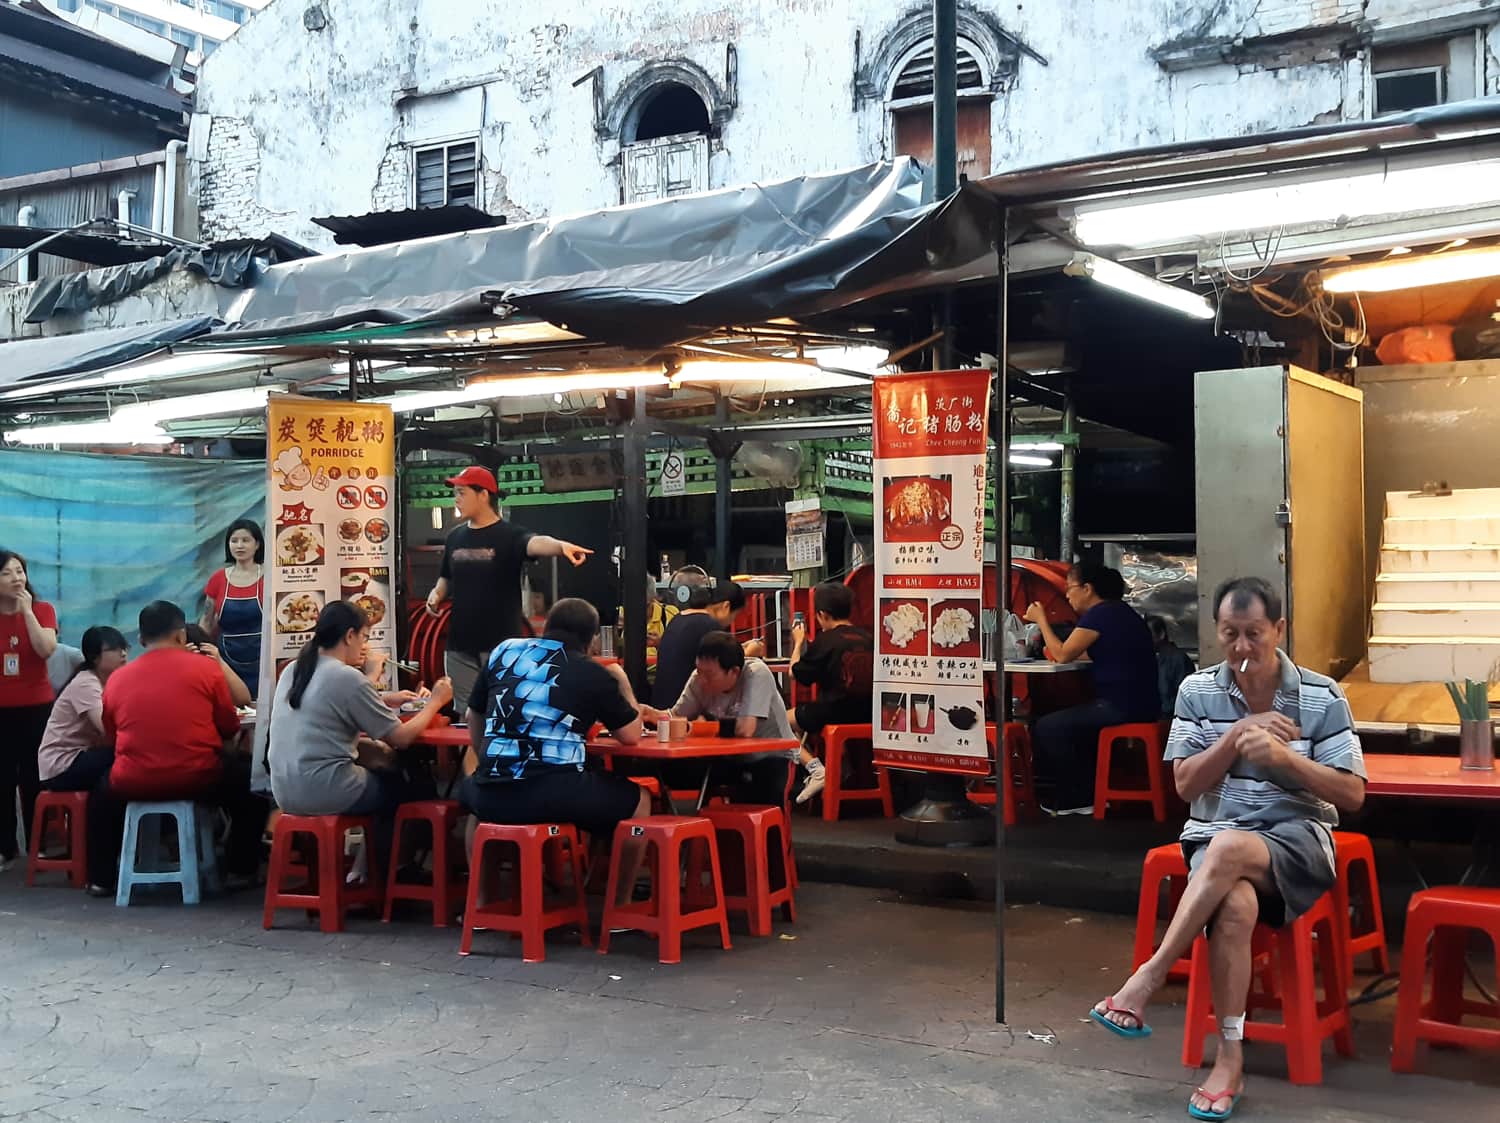 Petaling Street food - Yooi Kee chee cheong fun